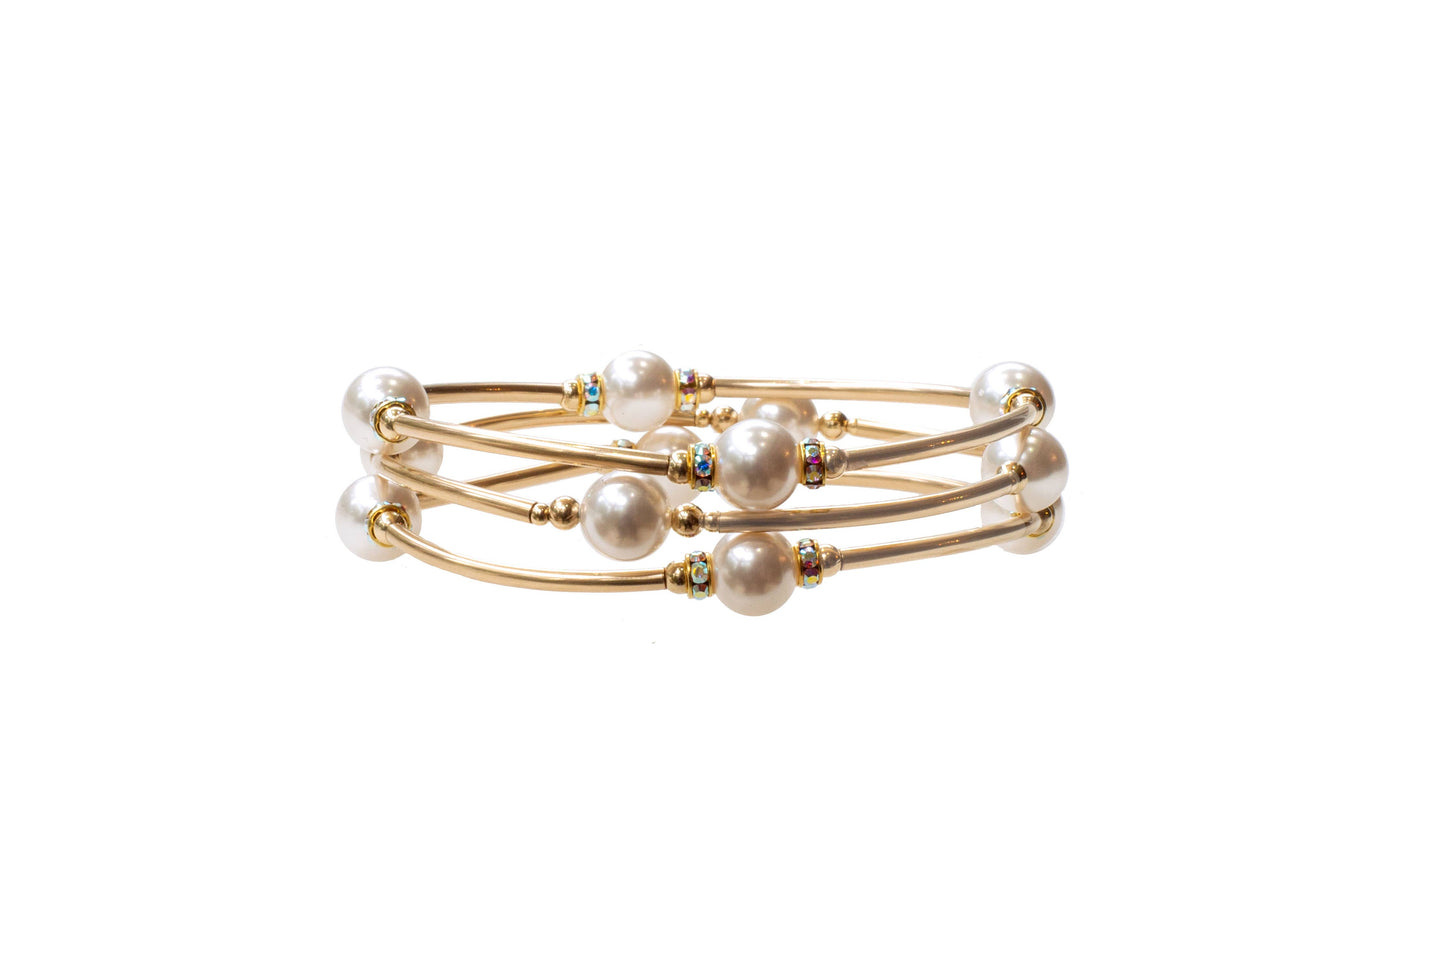 8mm Crystal White Blessing Bracelet with Gold-filled Links: L